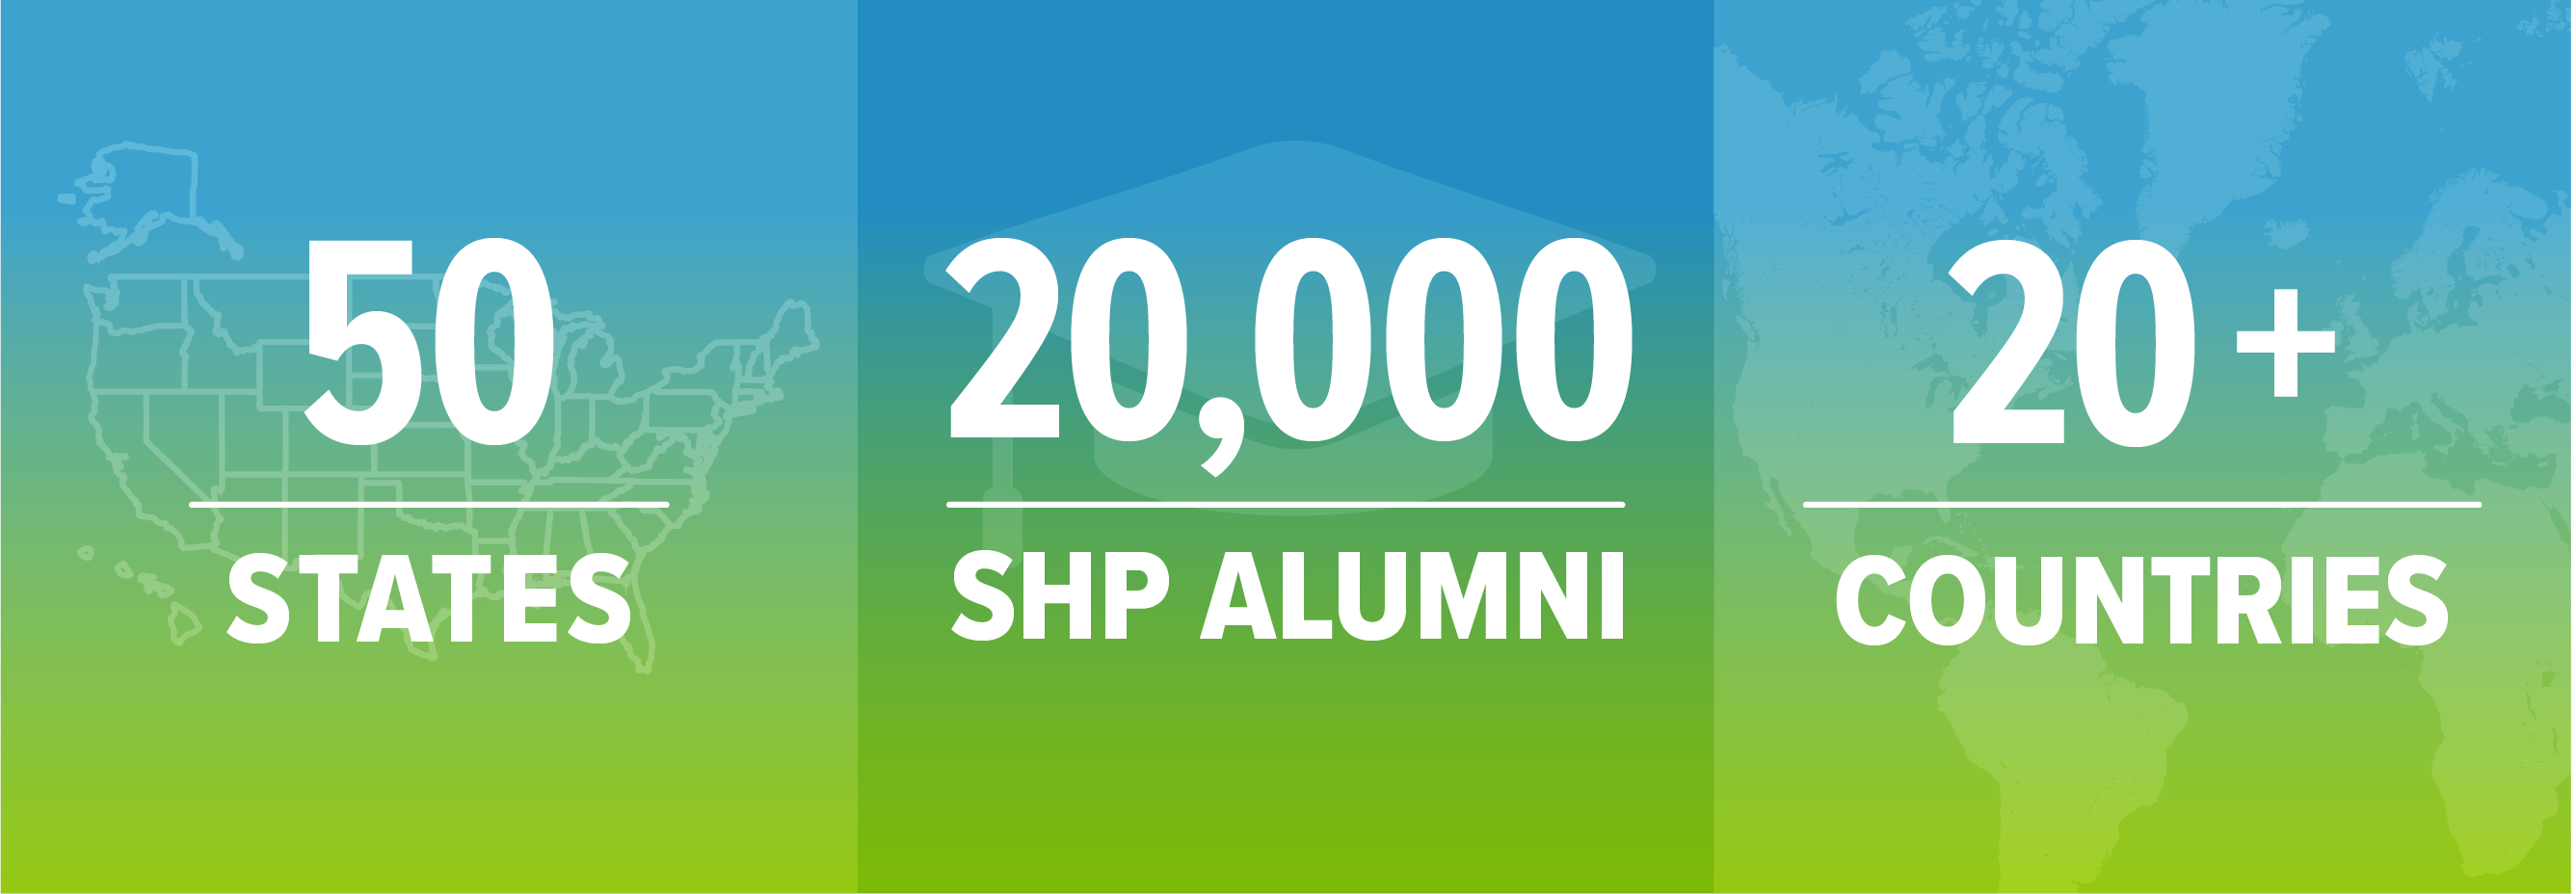 SHP Alumni Infographic